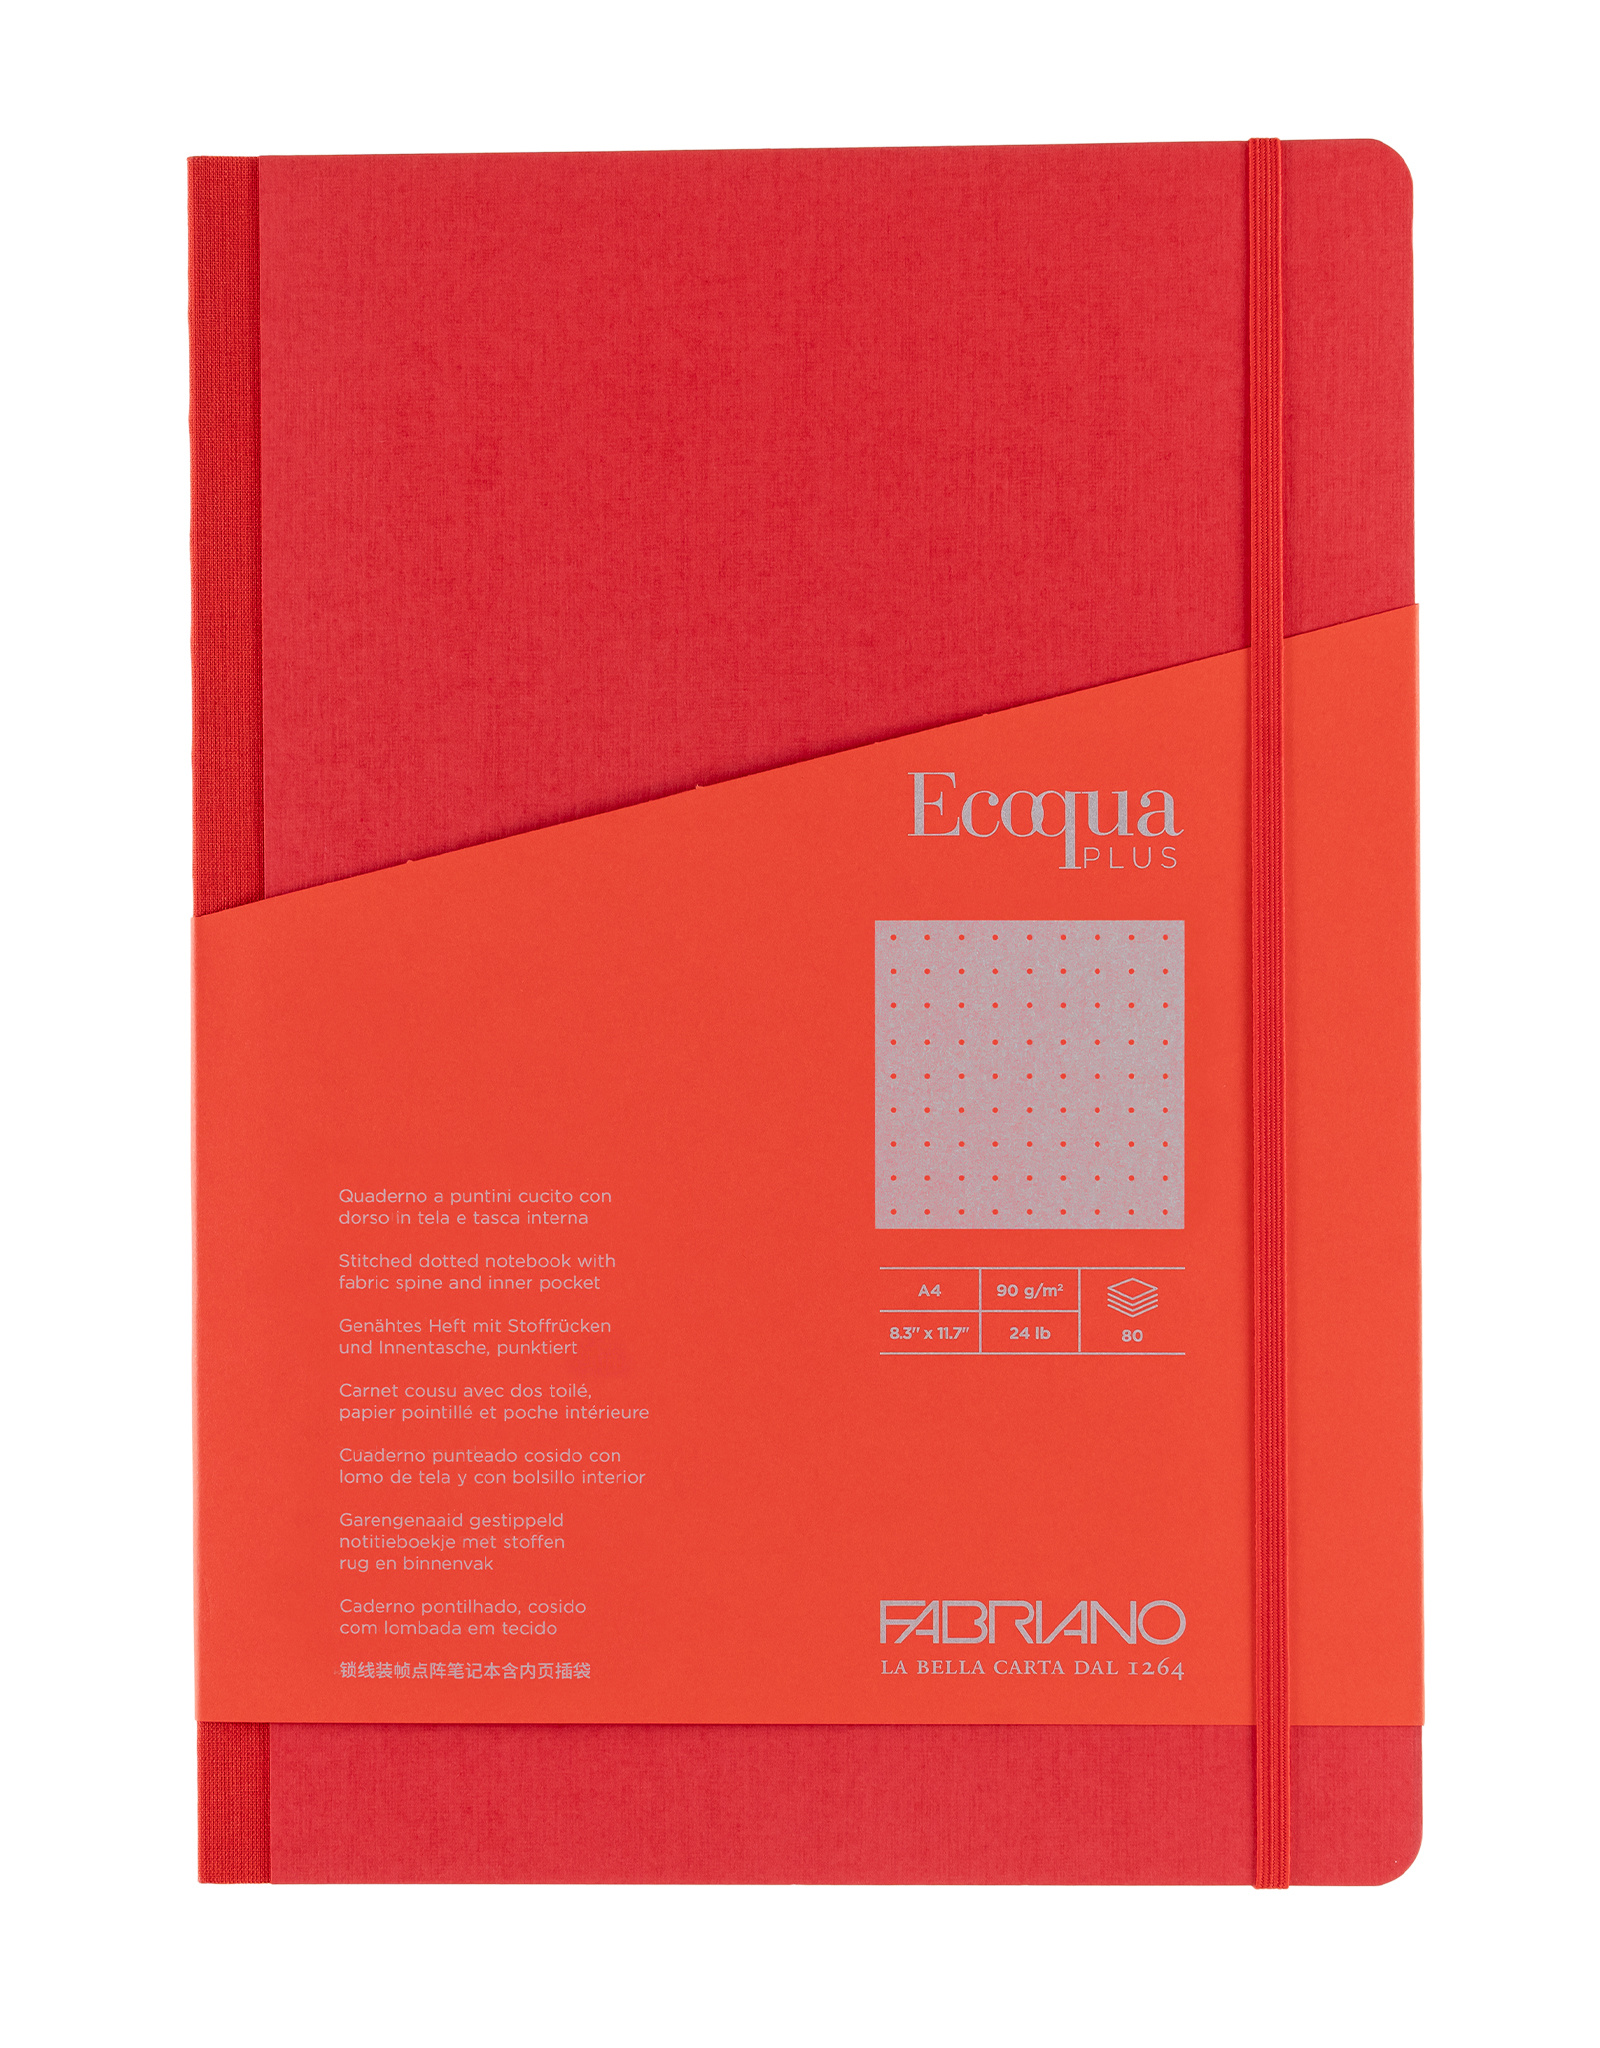 https://cdn.shoplightspeed.com/shops/636894/files/55888114/ecoqua-plus-fabric-bound-notebook-red-a4-dotted.jpg